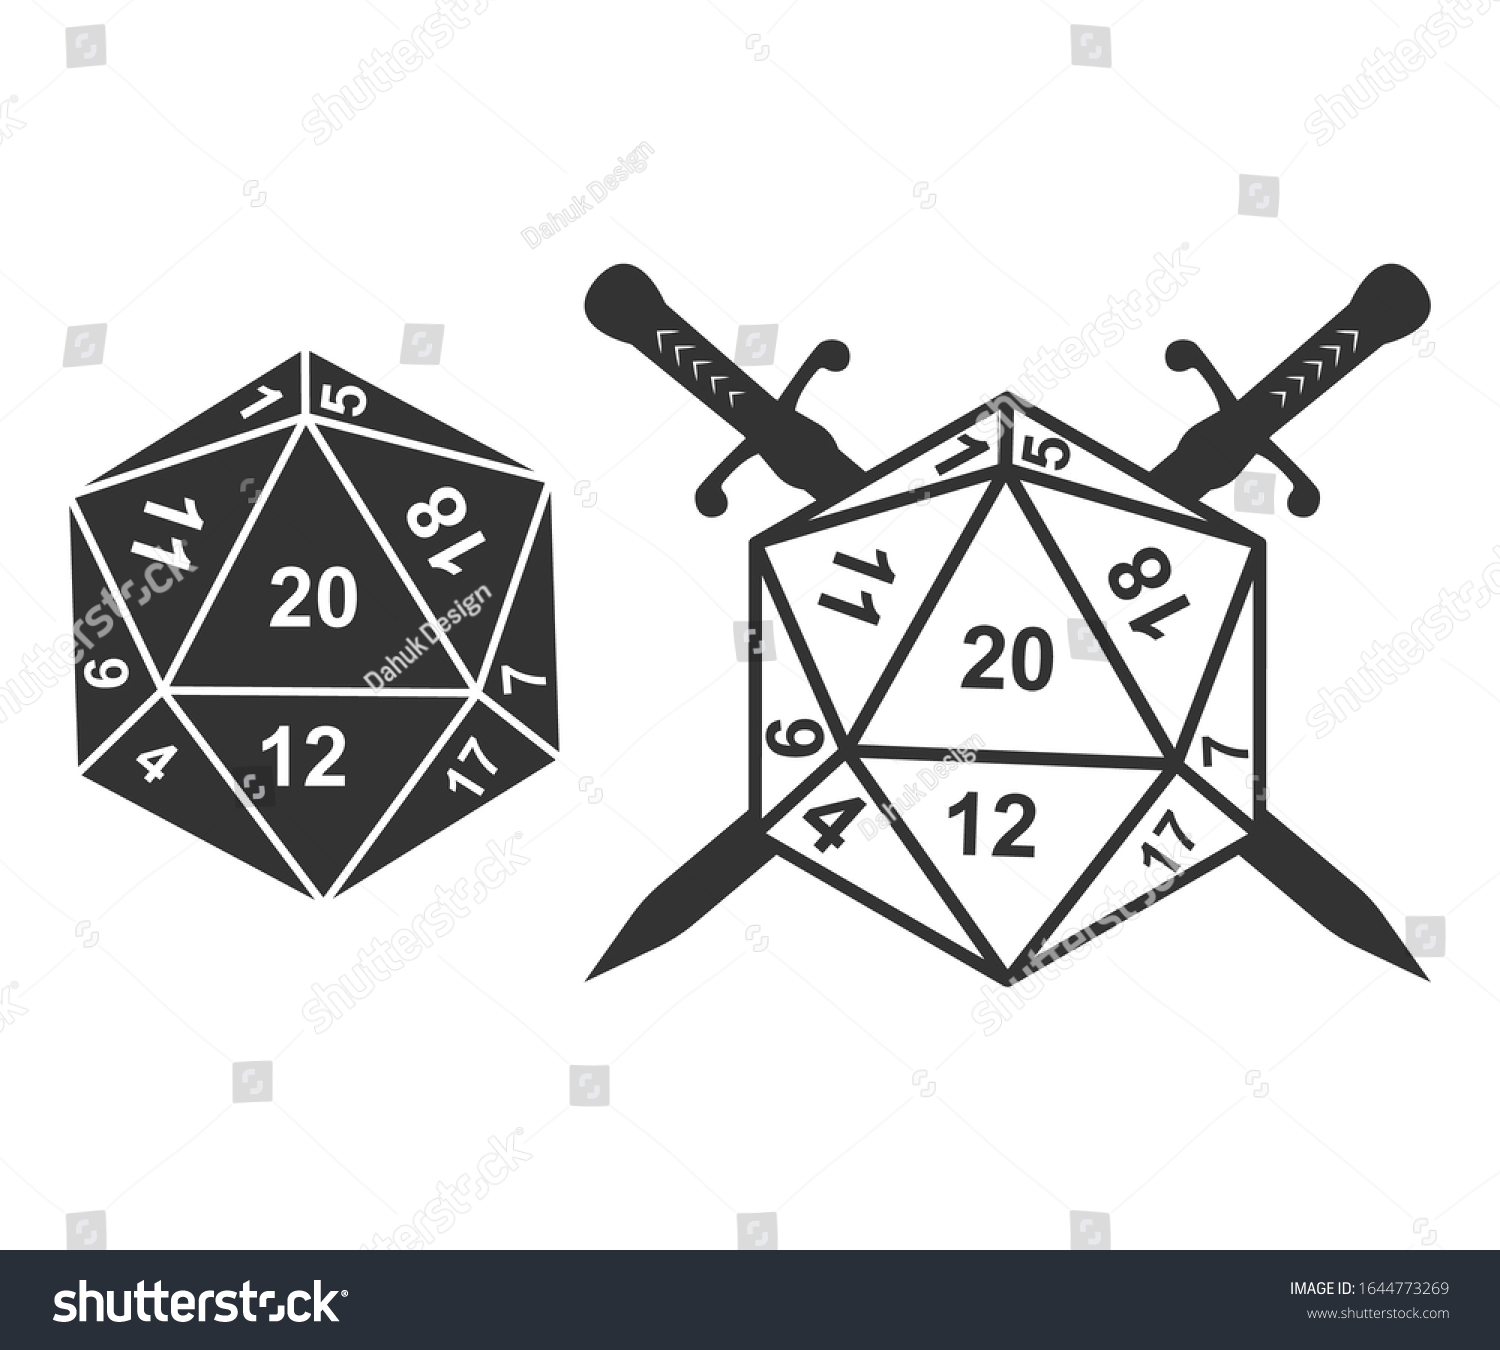 SVG of Swords crossed with 20 side Vector Illustration. D20 dungeons svg